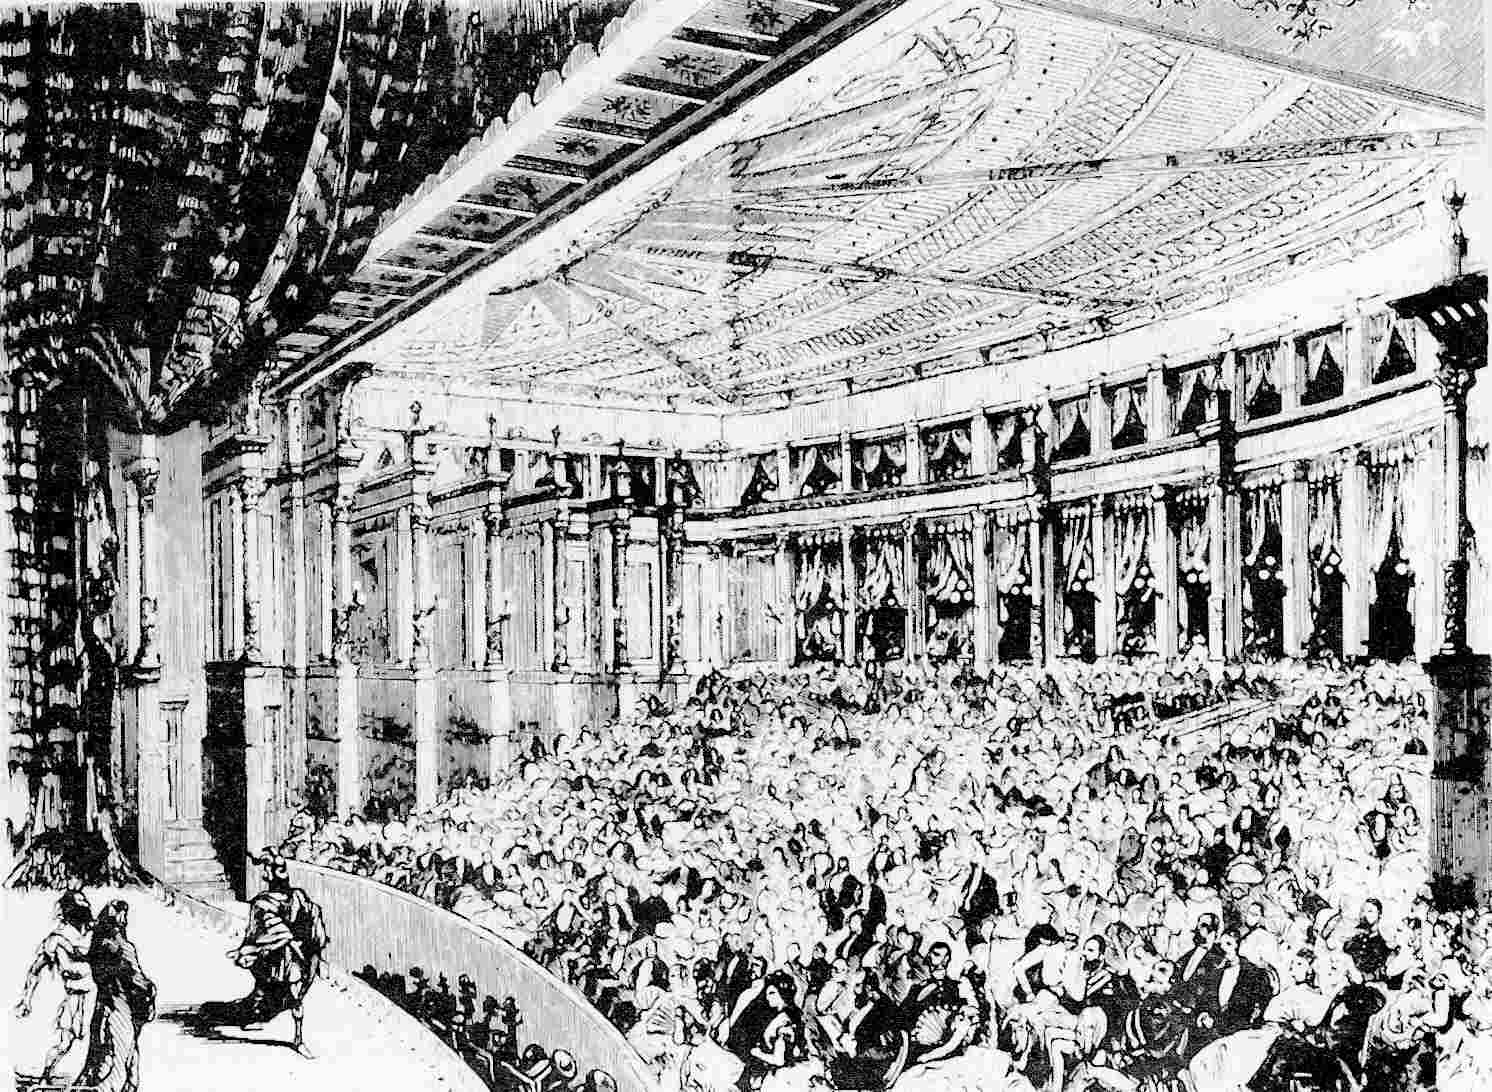 Das Rheingold at Bayreuth in 1876